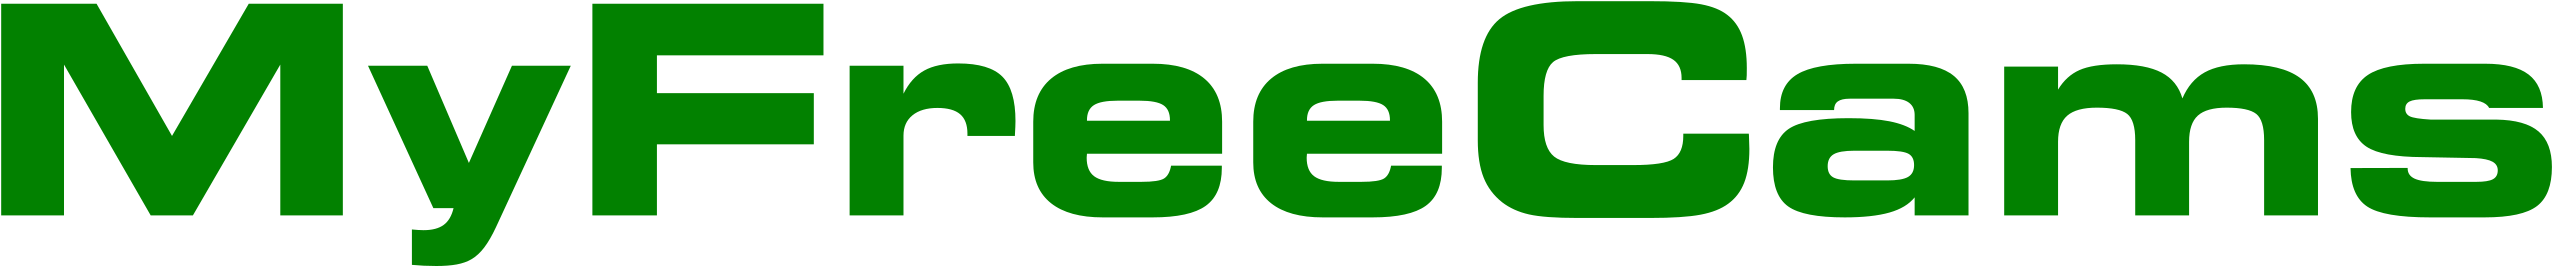 File:MyFreeCams - logo.svg - Wikimedia Commons